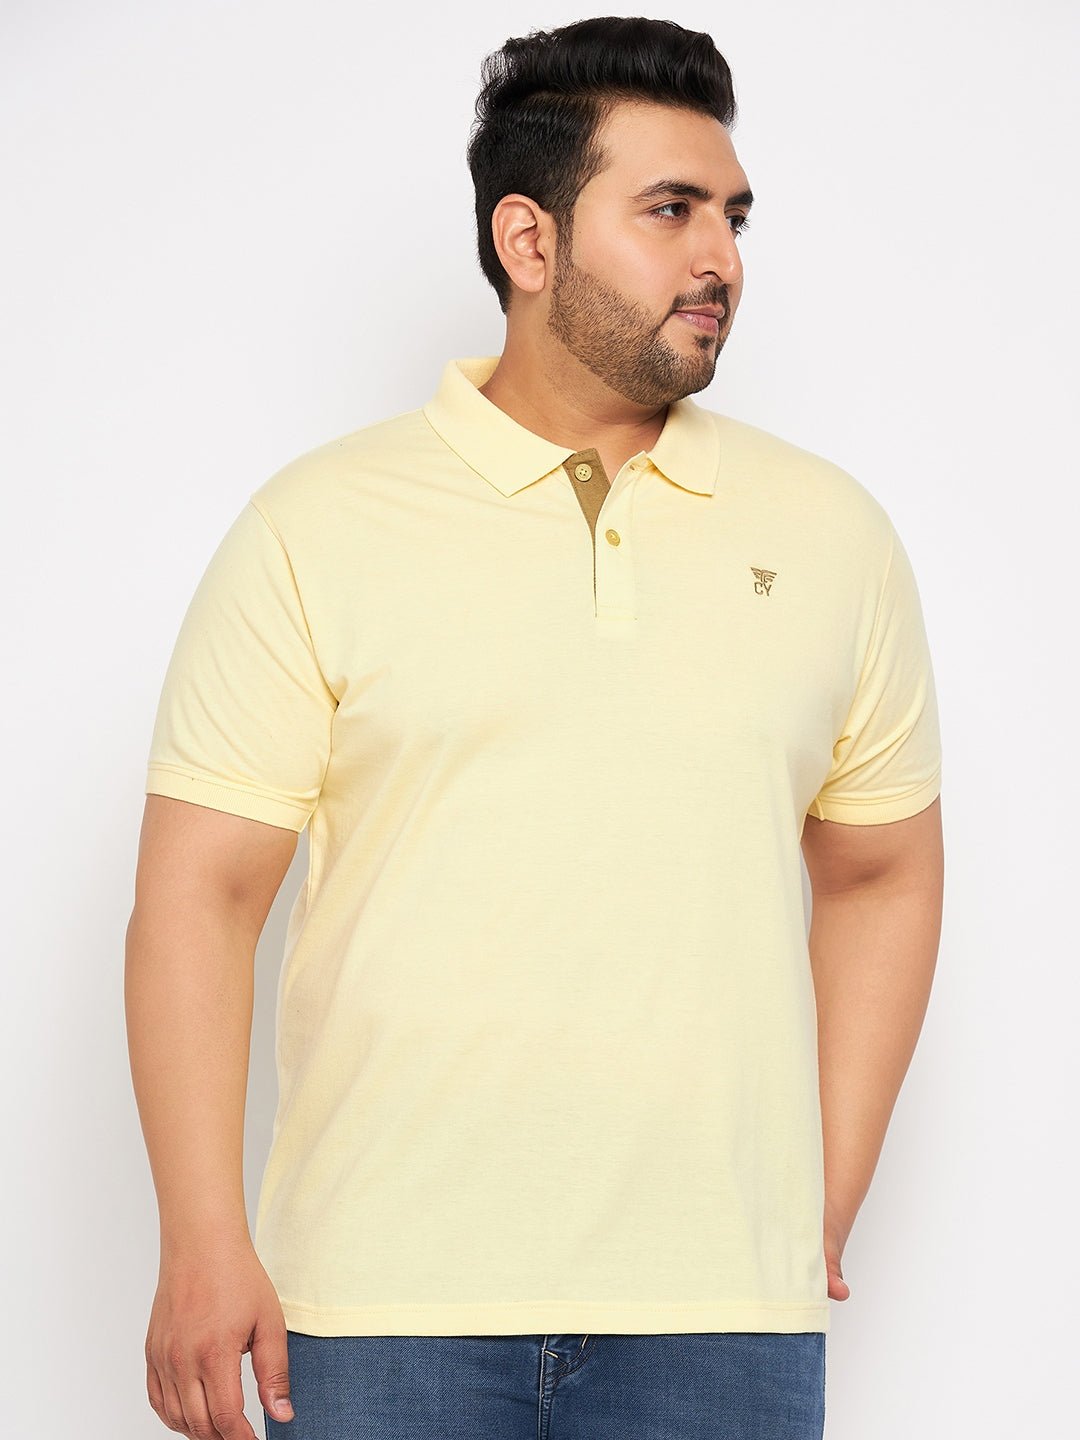 Plus Size Light Yellow Polo T-Shirt - clubyork